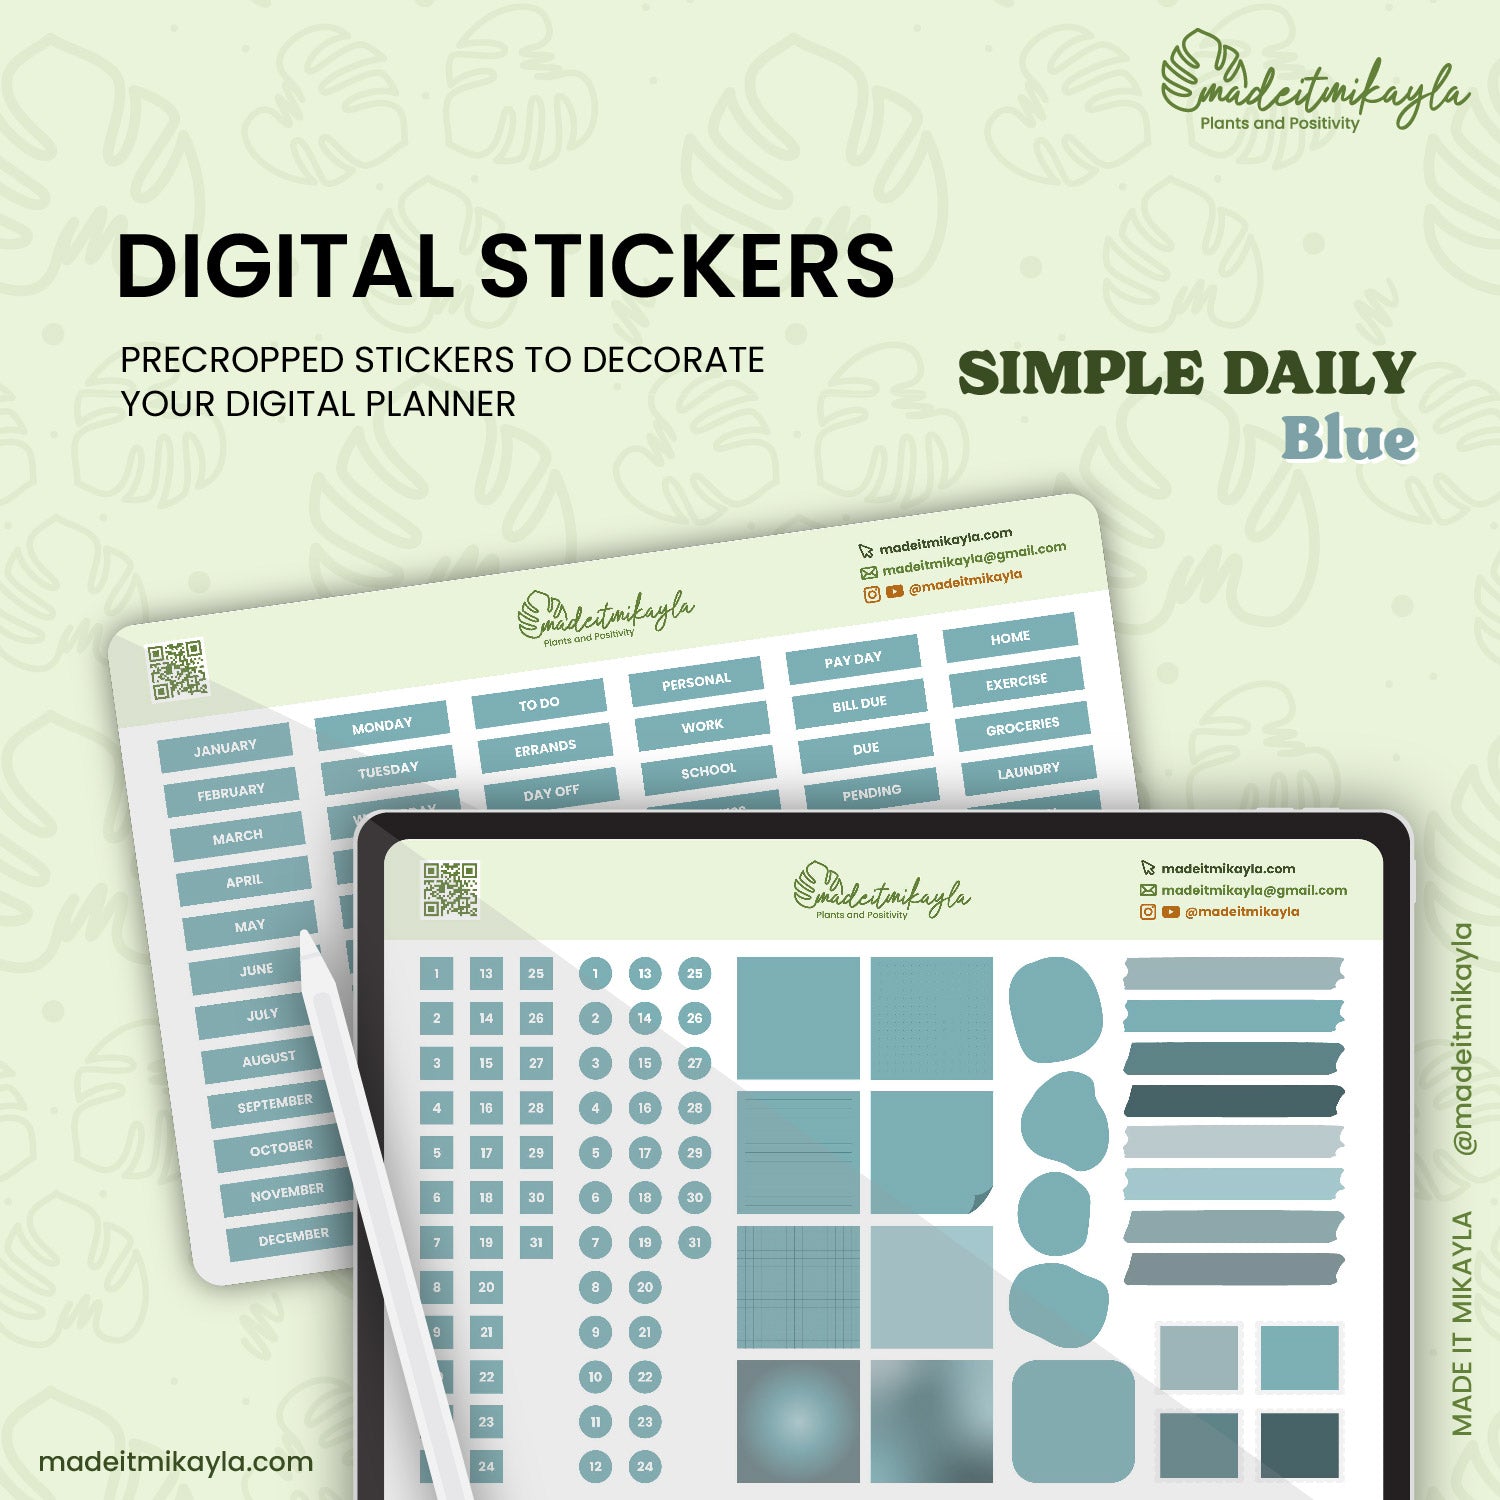 Blue Simple Daily Digital Stickers | MadeItMikayla